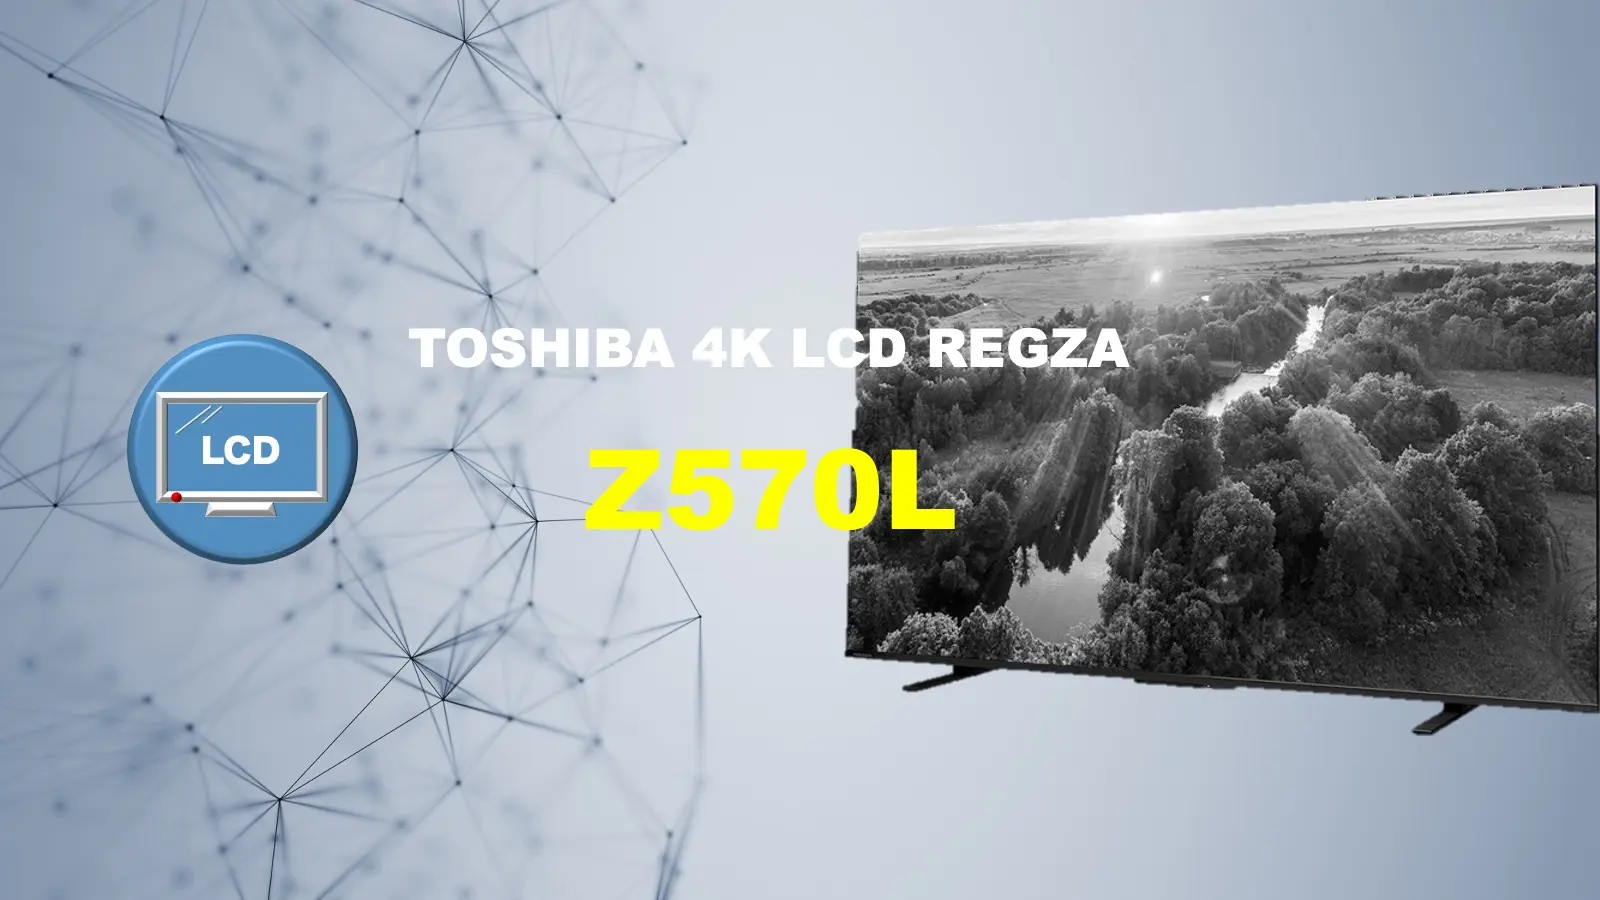 TVS(東芝) REGZA 4K液晶レグザ Z570Lレビュー記事用のオリジナルアイキャッチ画像